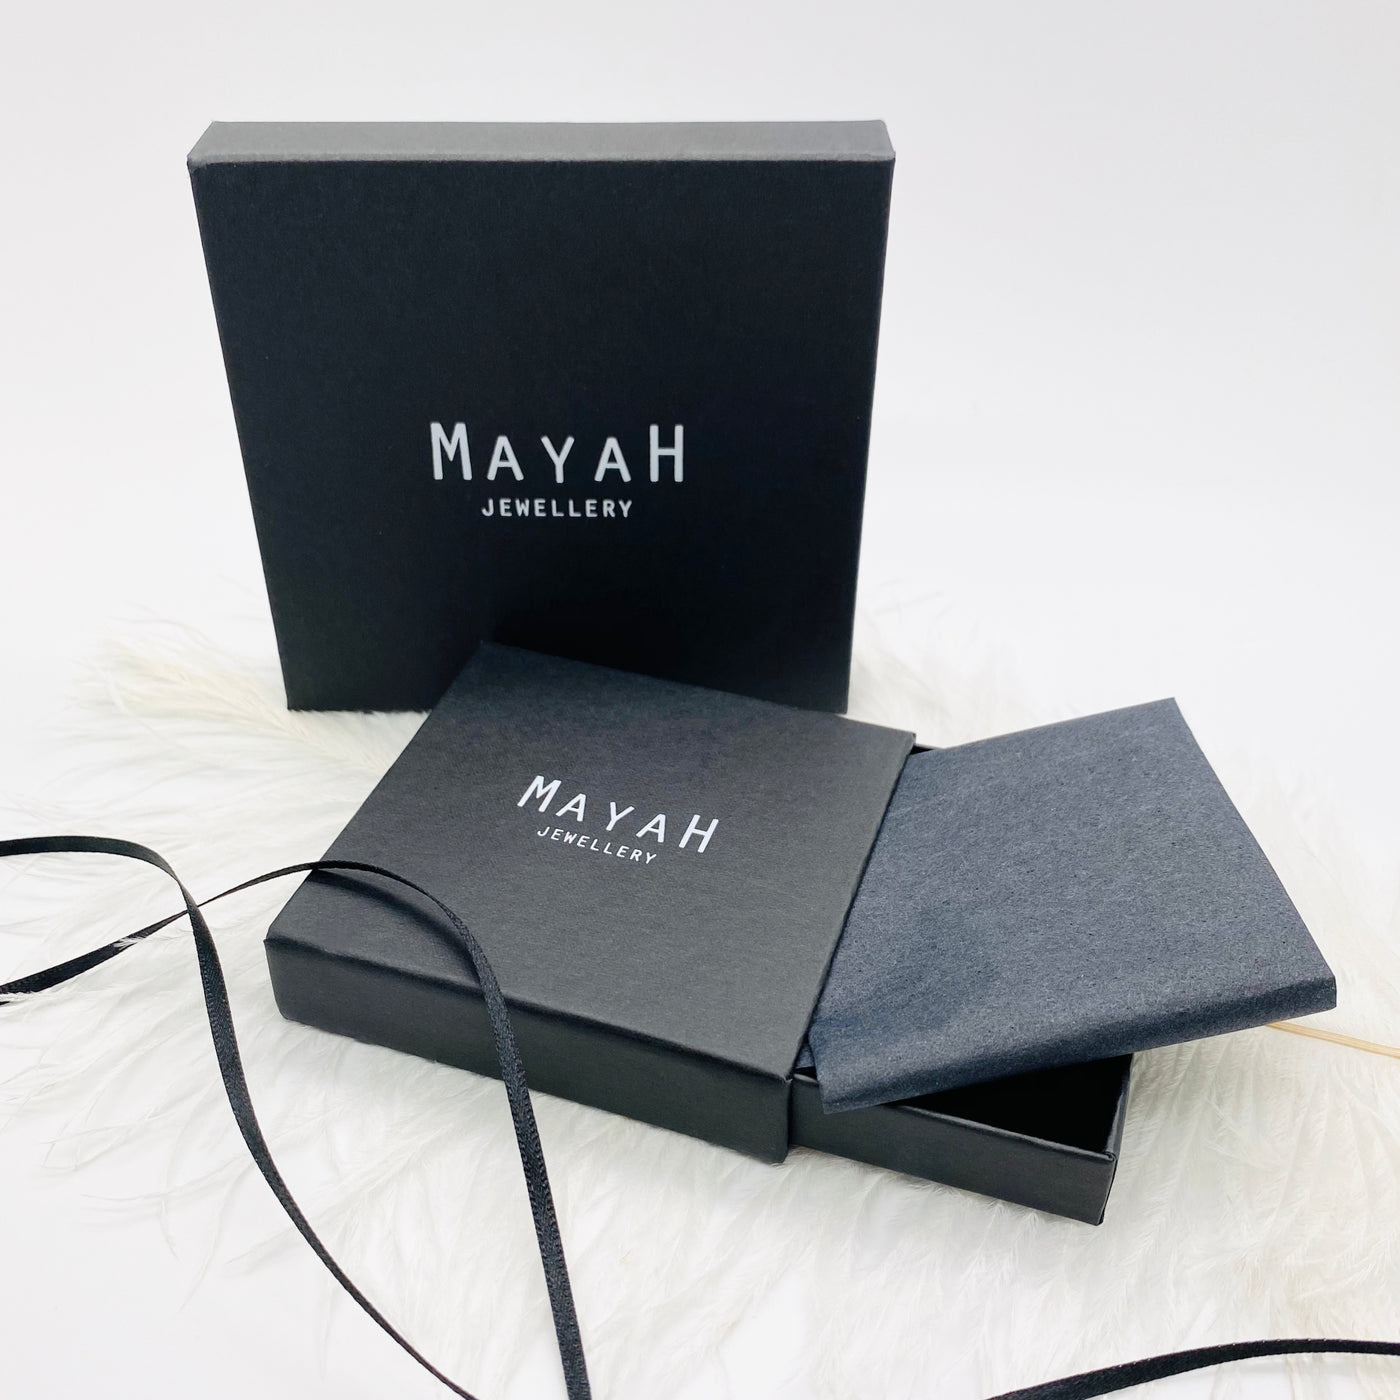 100-Mayah-Jewellery-Voucher